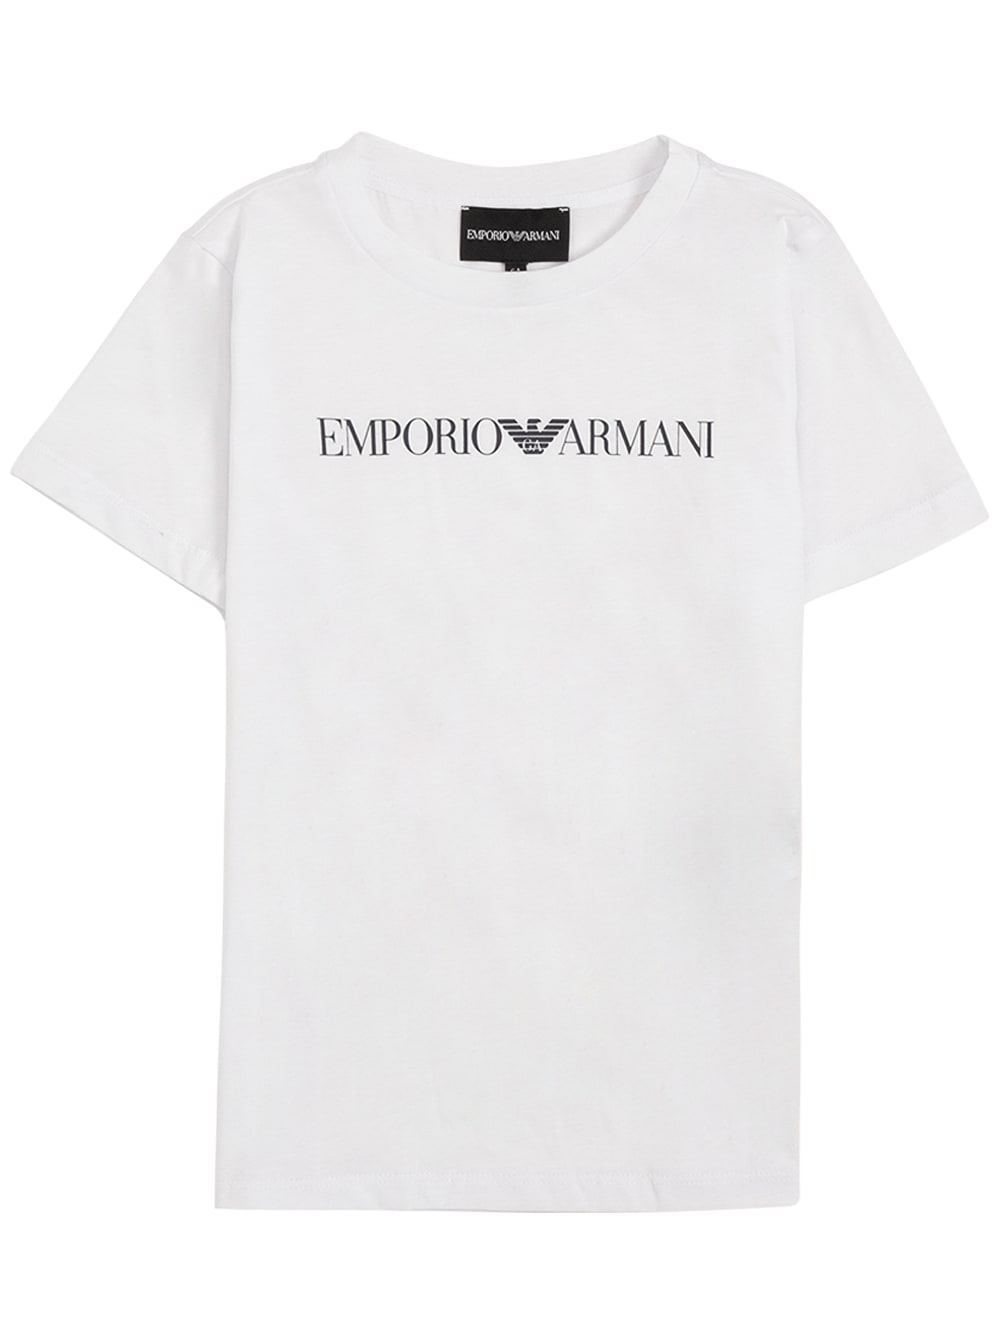 Emporio Armani Armani Kids Boys White Jersey T-shirt With Contrasting Logo